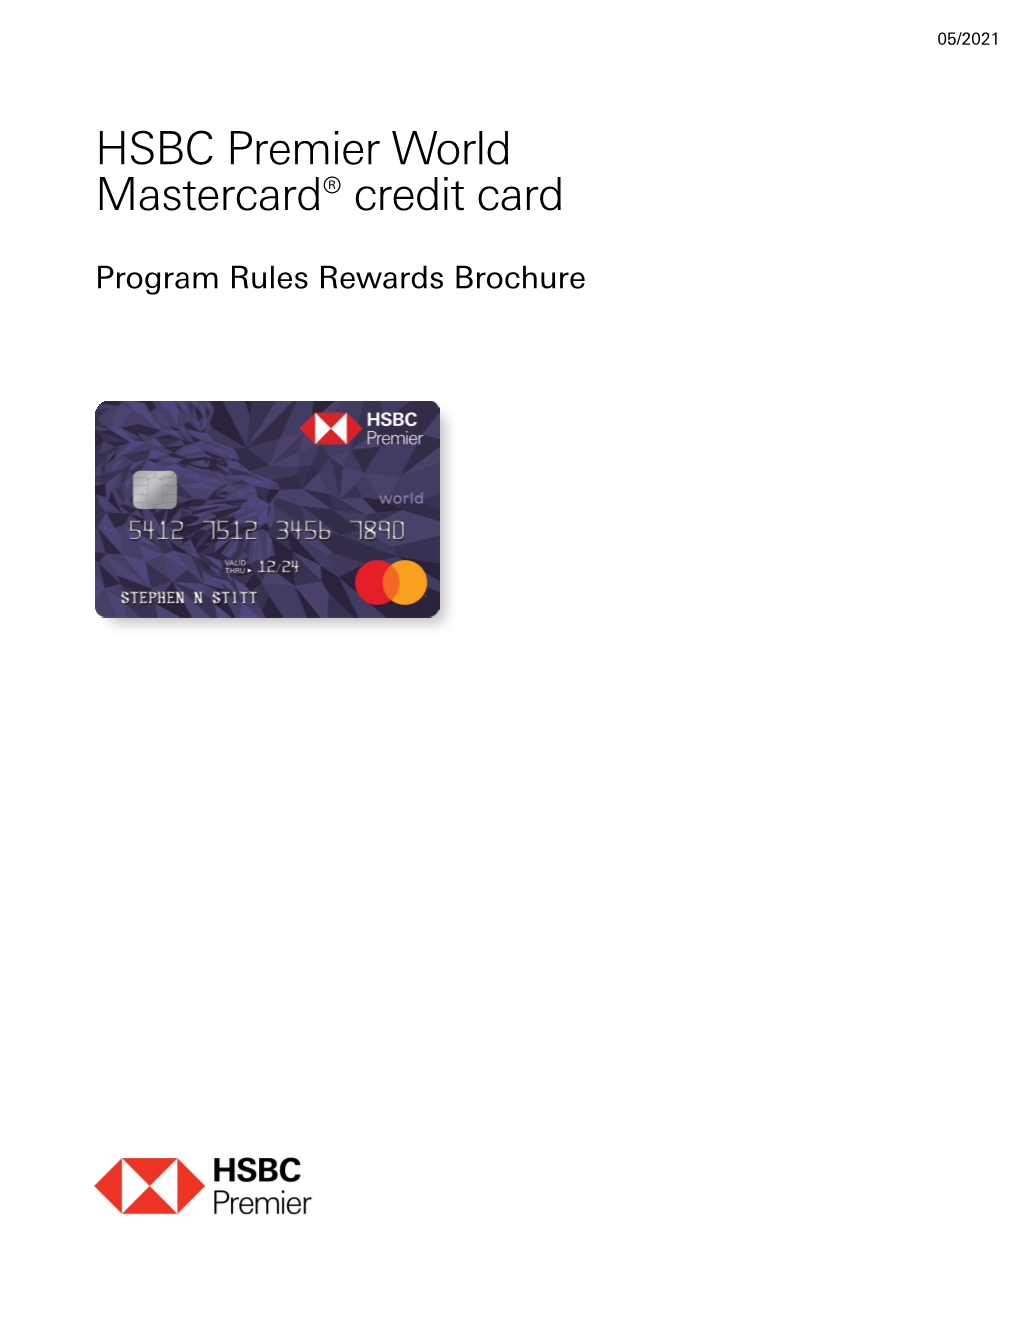 HSBC Premier World Mastercard® Credit Card